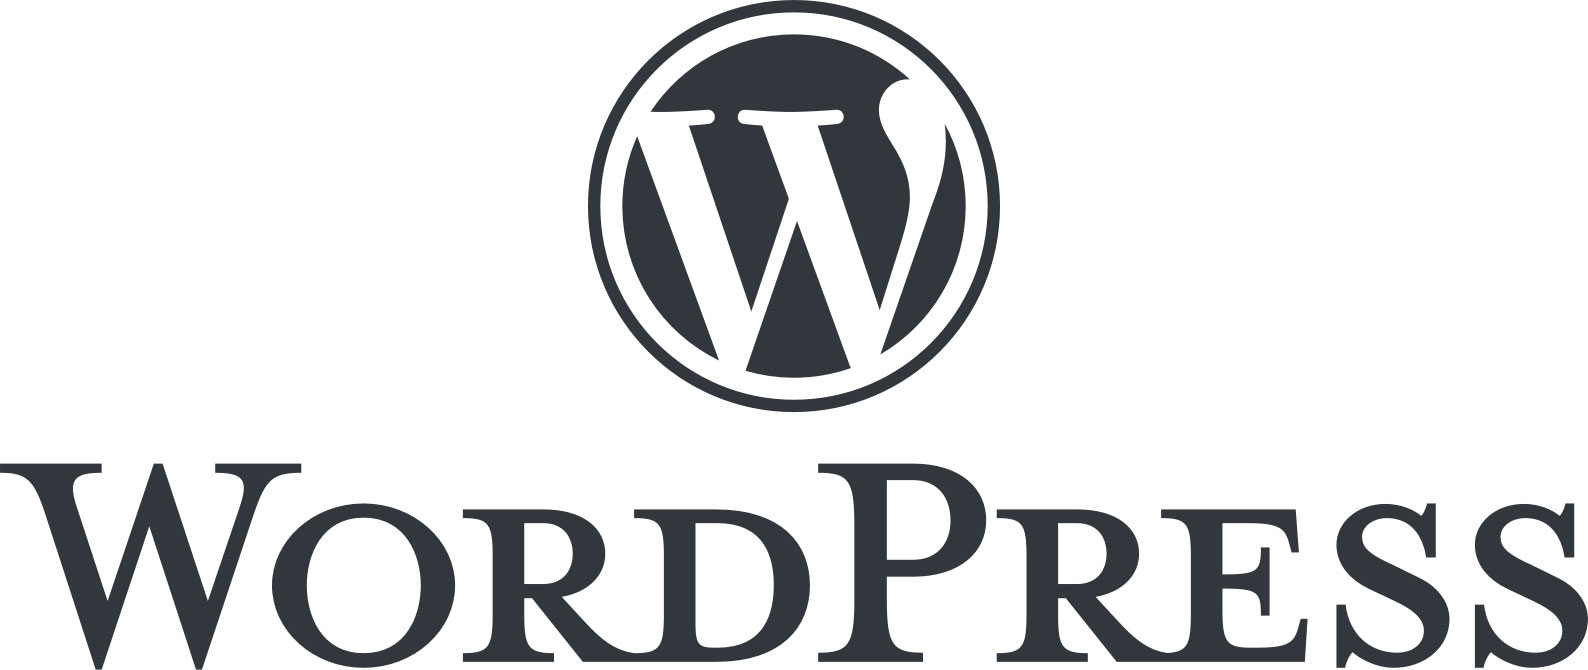 WordPress-logotype-alternative.jpg